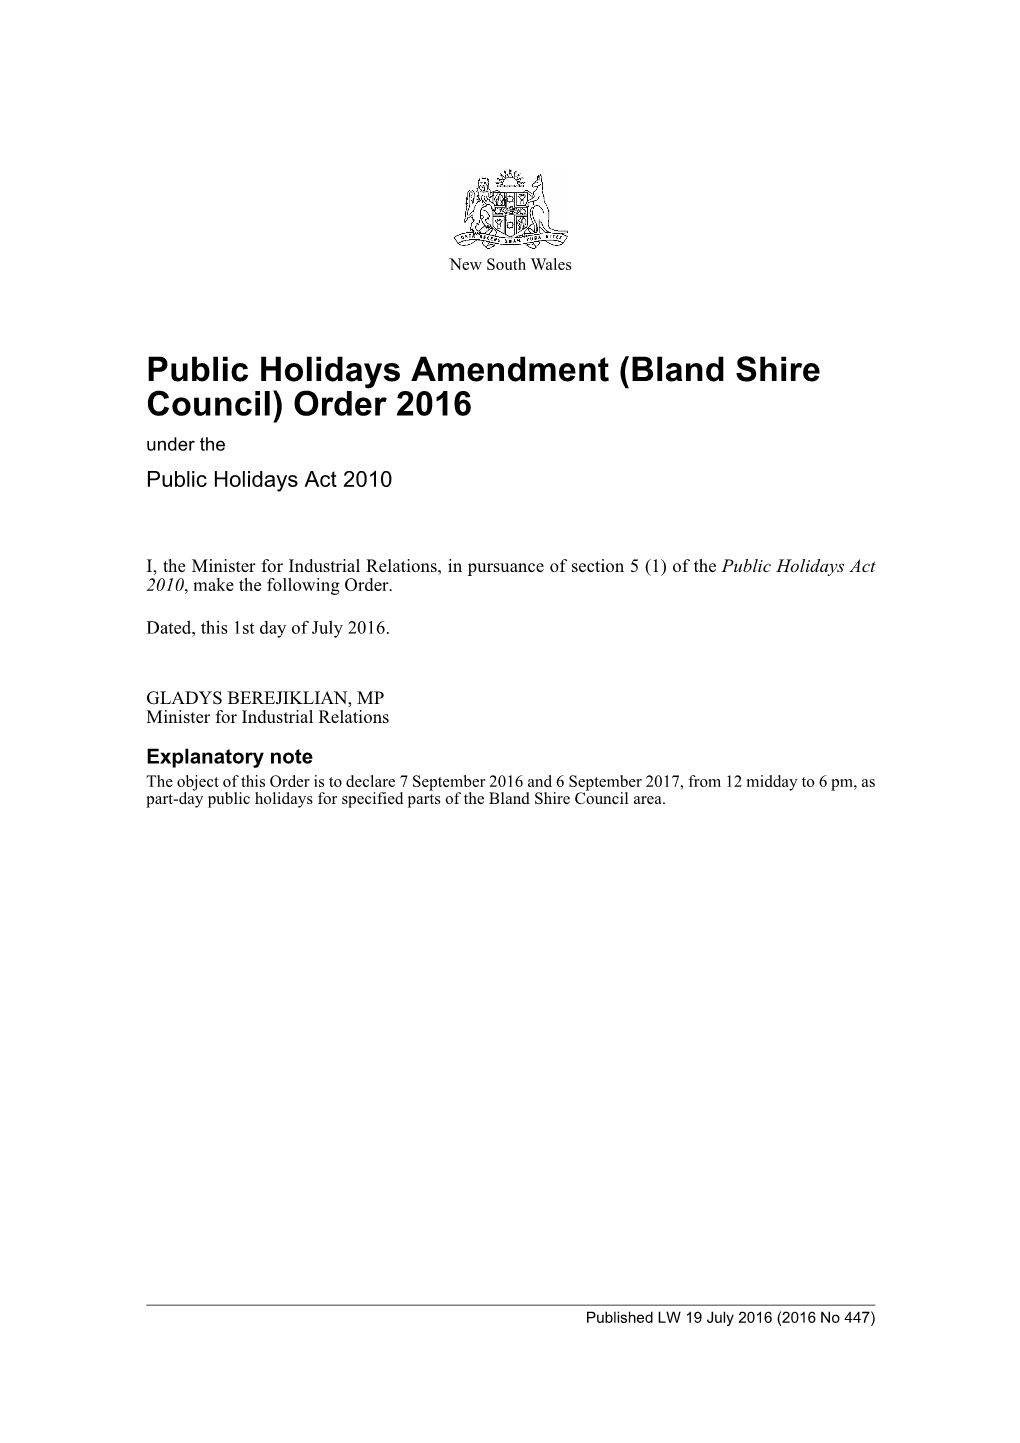 Public Holidays Amendment (Bland Shire Council) Order 2016 Under the Public Holidays Act 2010